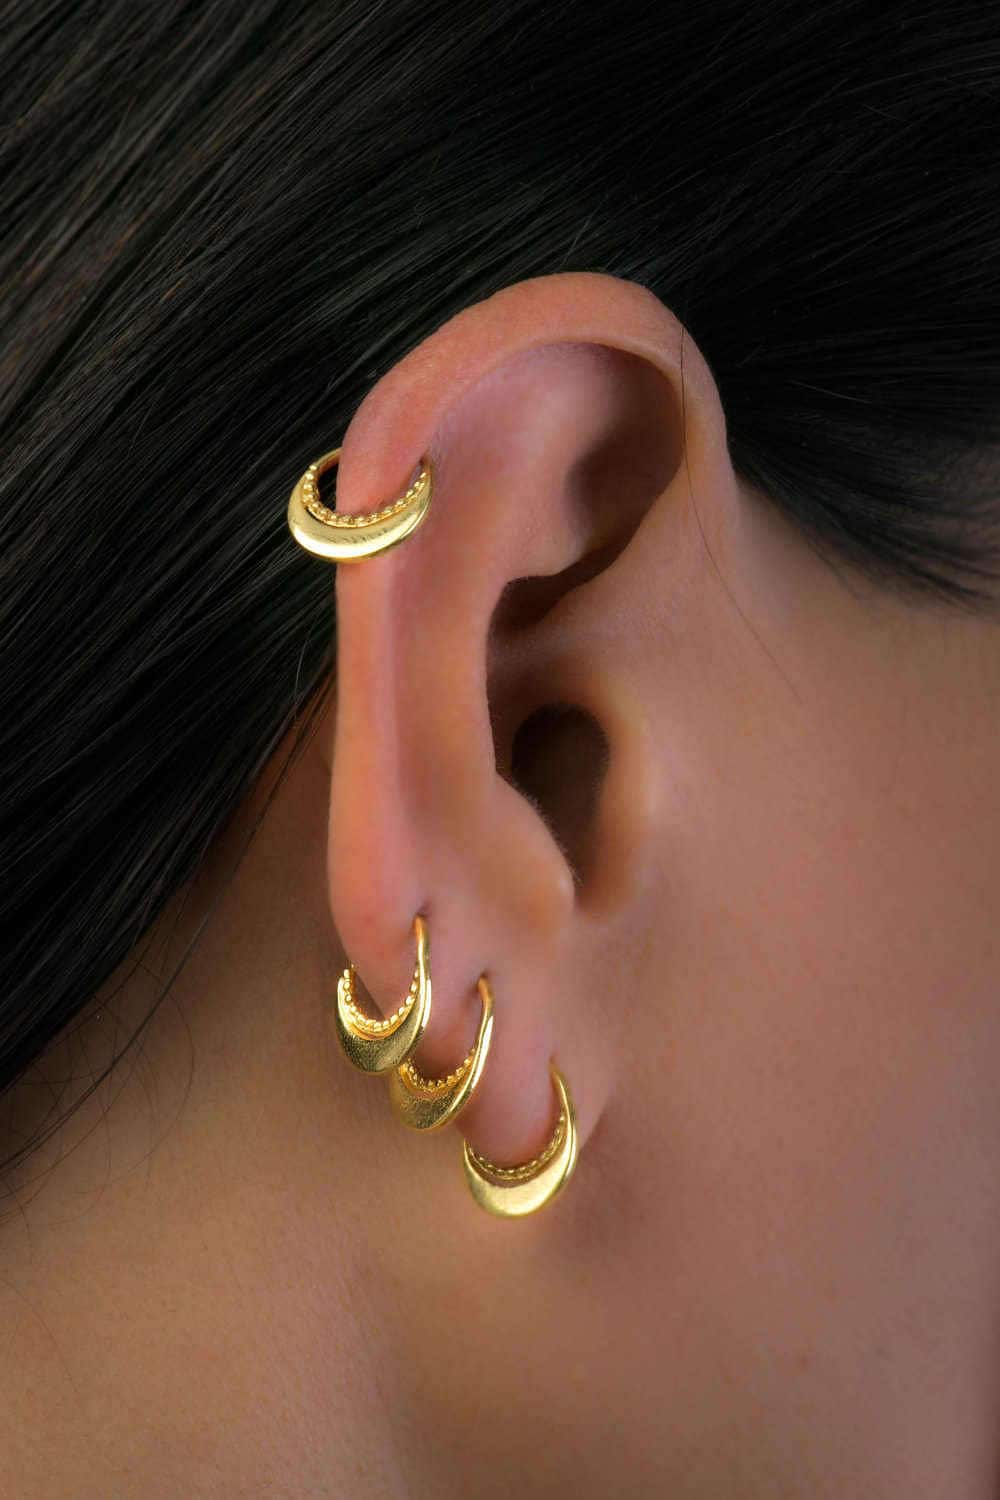 Peacock full ear covering earring | Full ear earrings, Gold fashion necklace,  Diamond jewelry designs